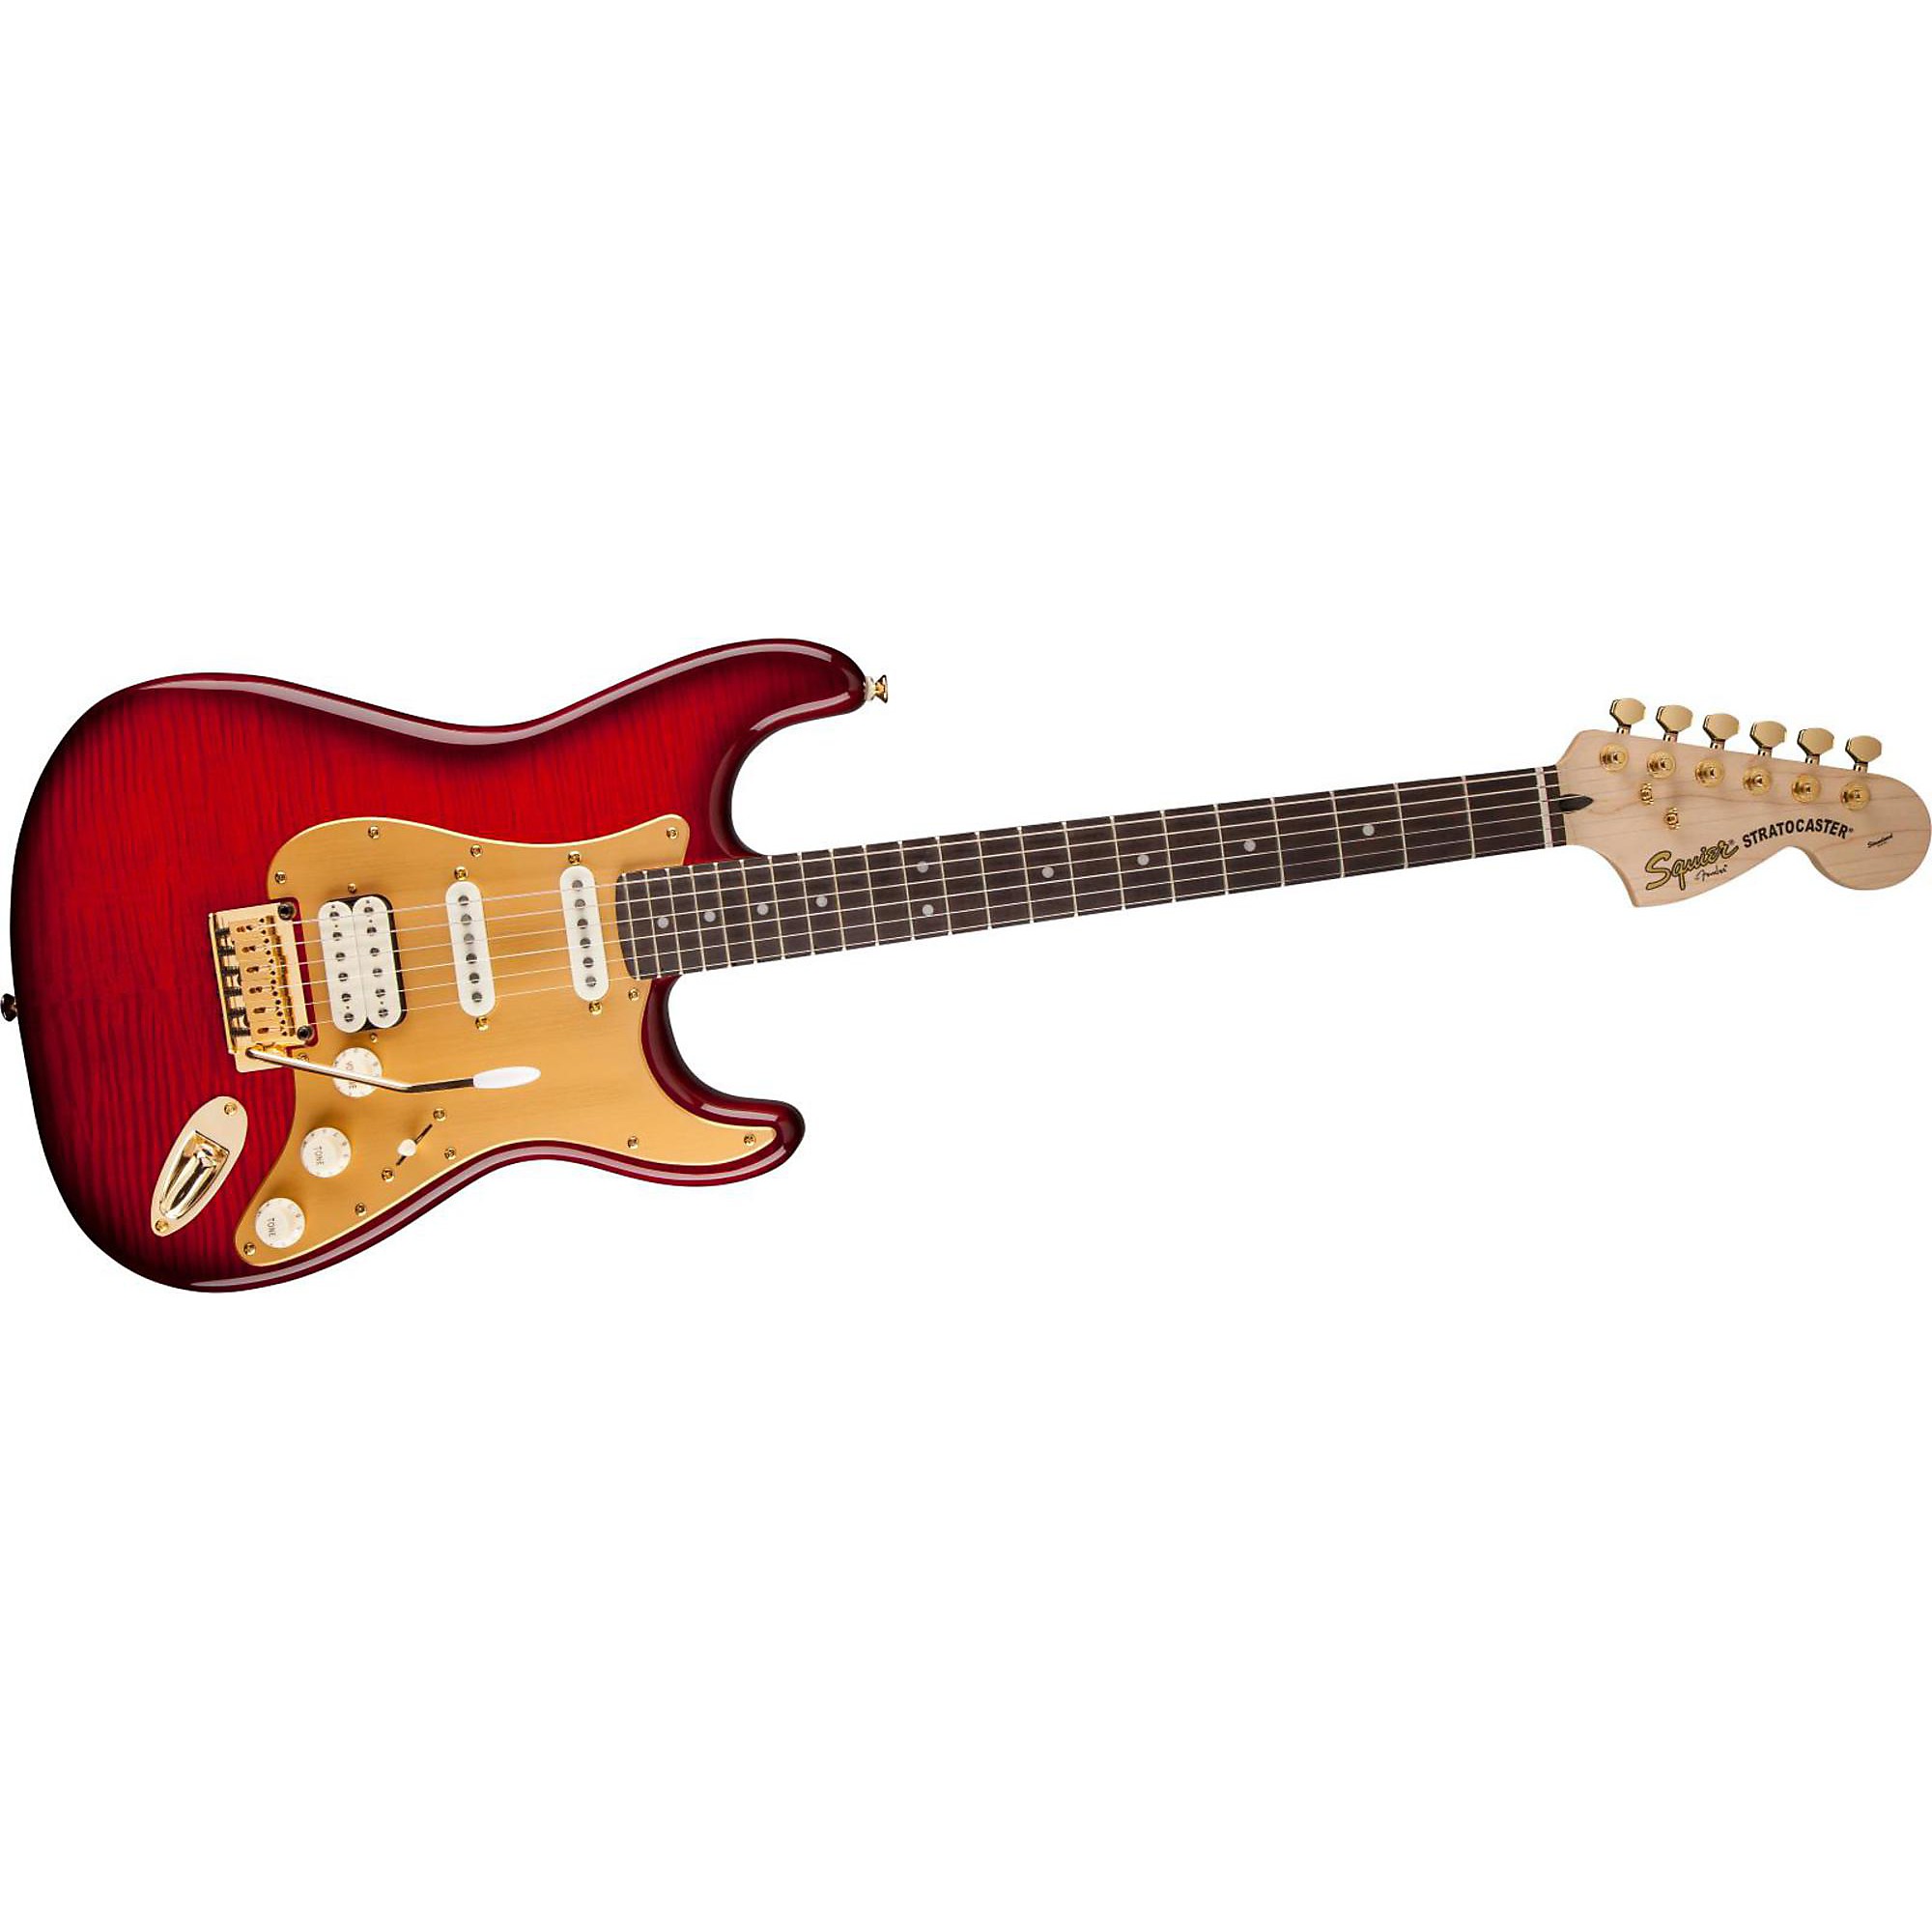 Squier stratocaster hss. Squier Standard. Rockson HSS Electric Guitar Red. Squier Stratocaster Standard head. Новый бренд ред скваер.